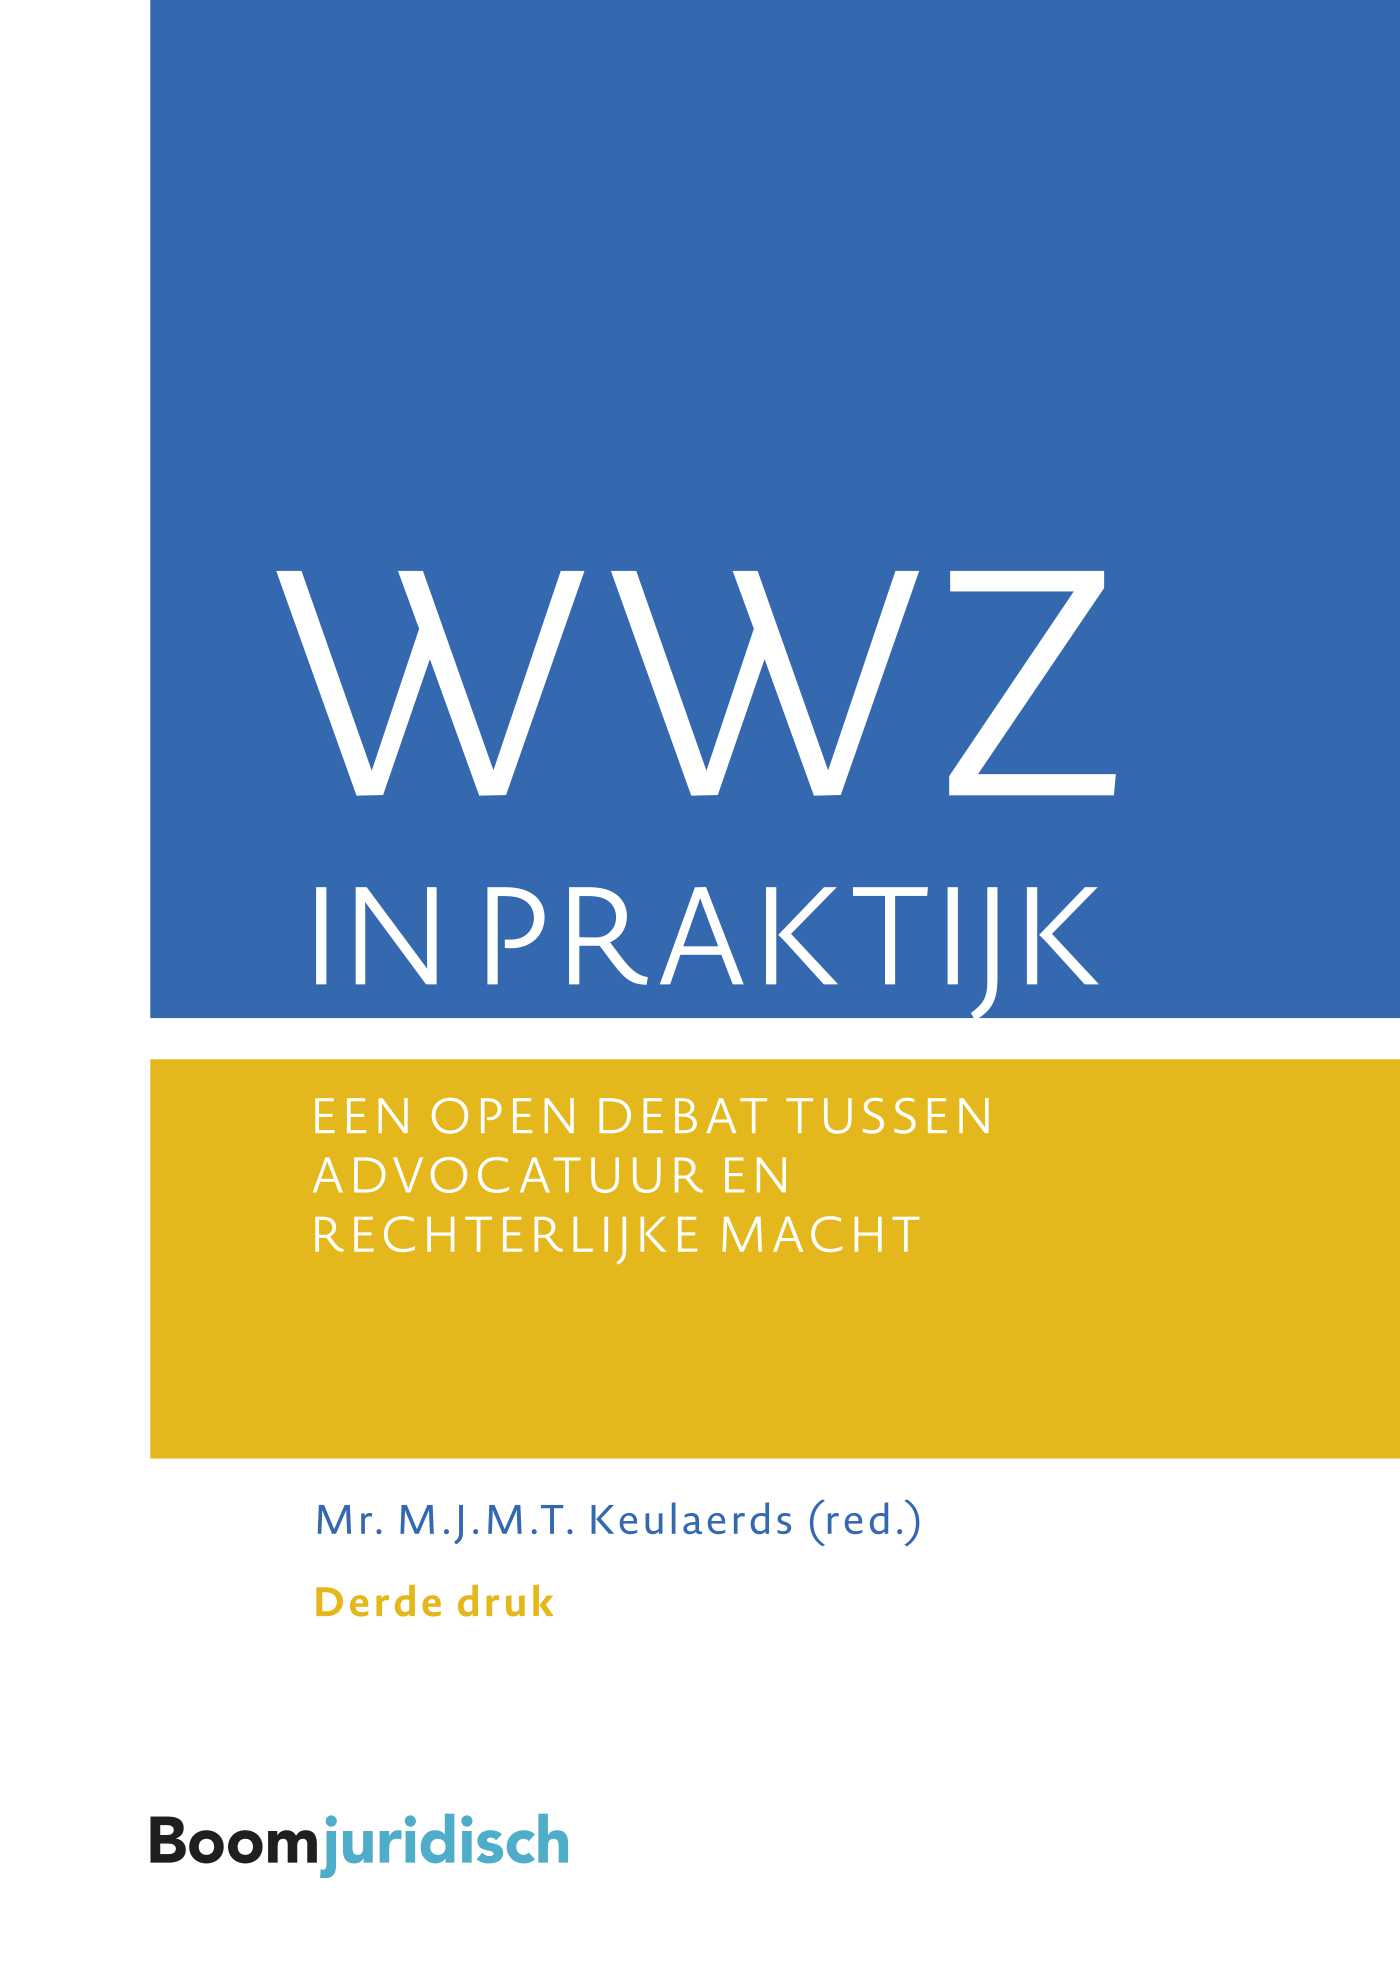 WWZ in praktijk (Ebook)